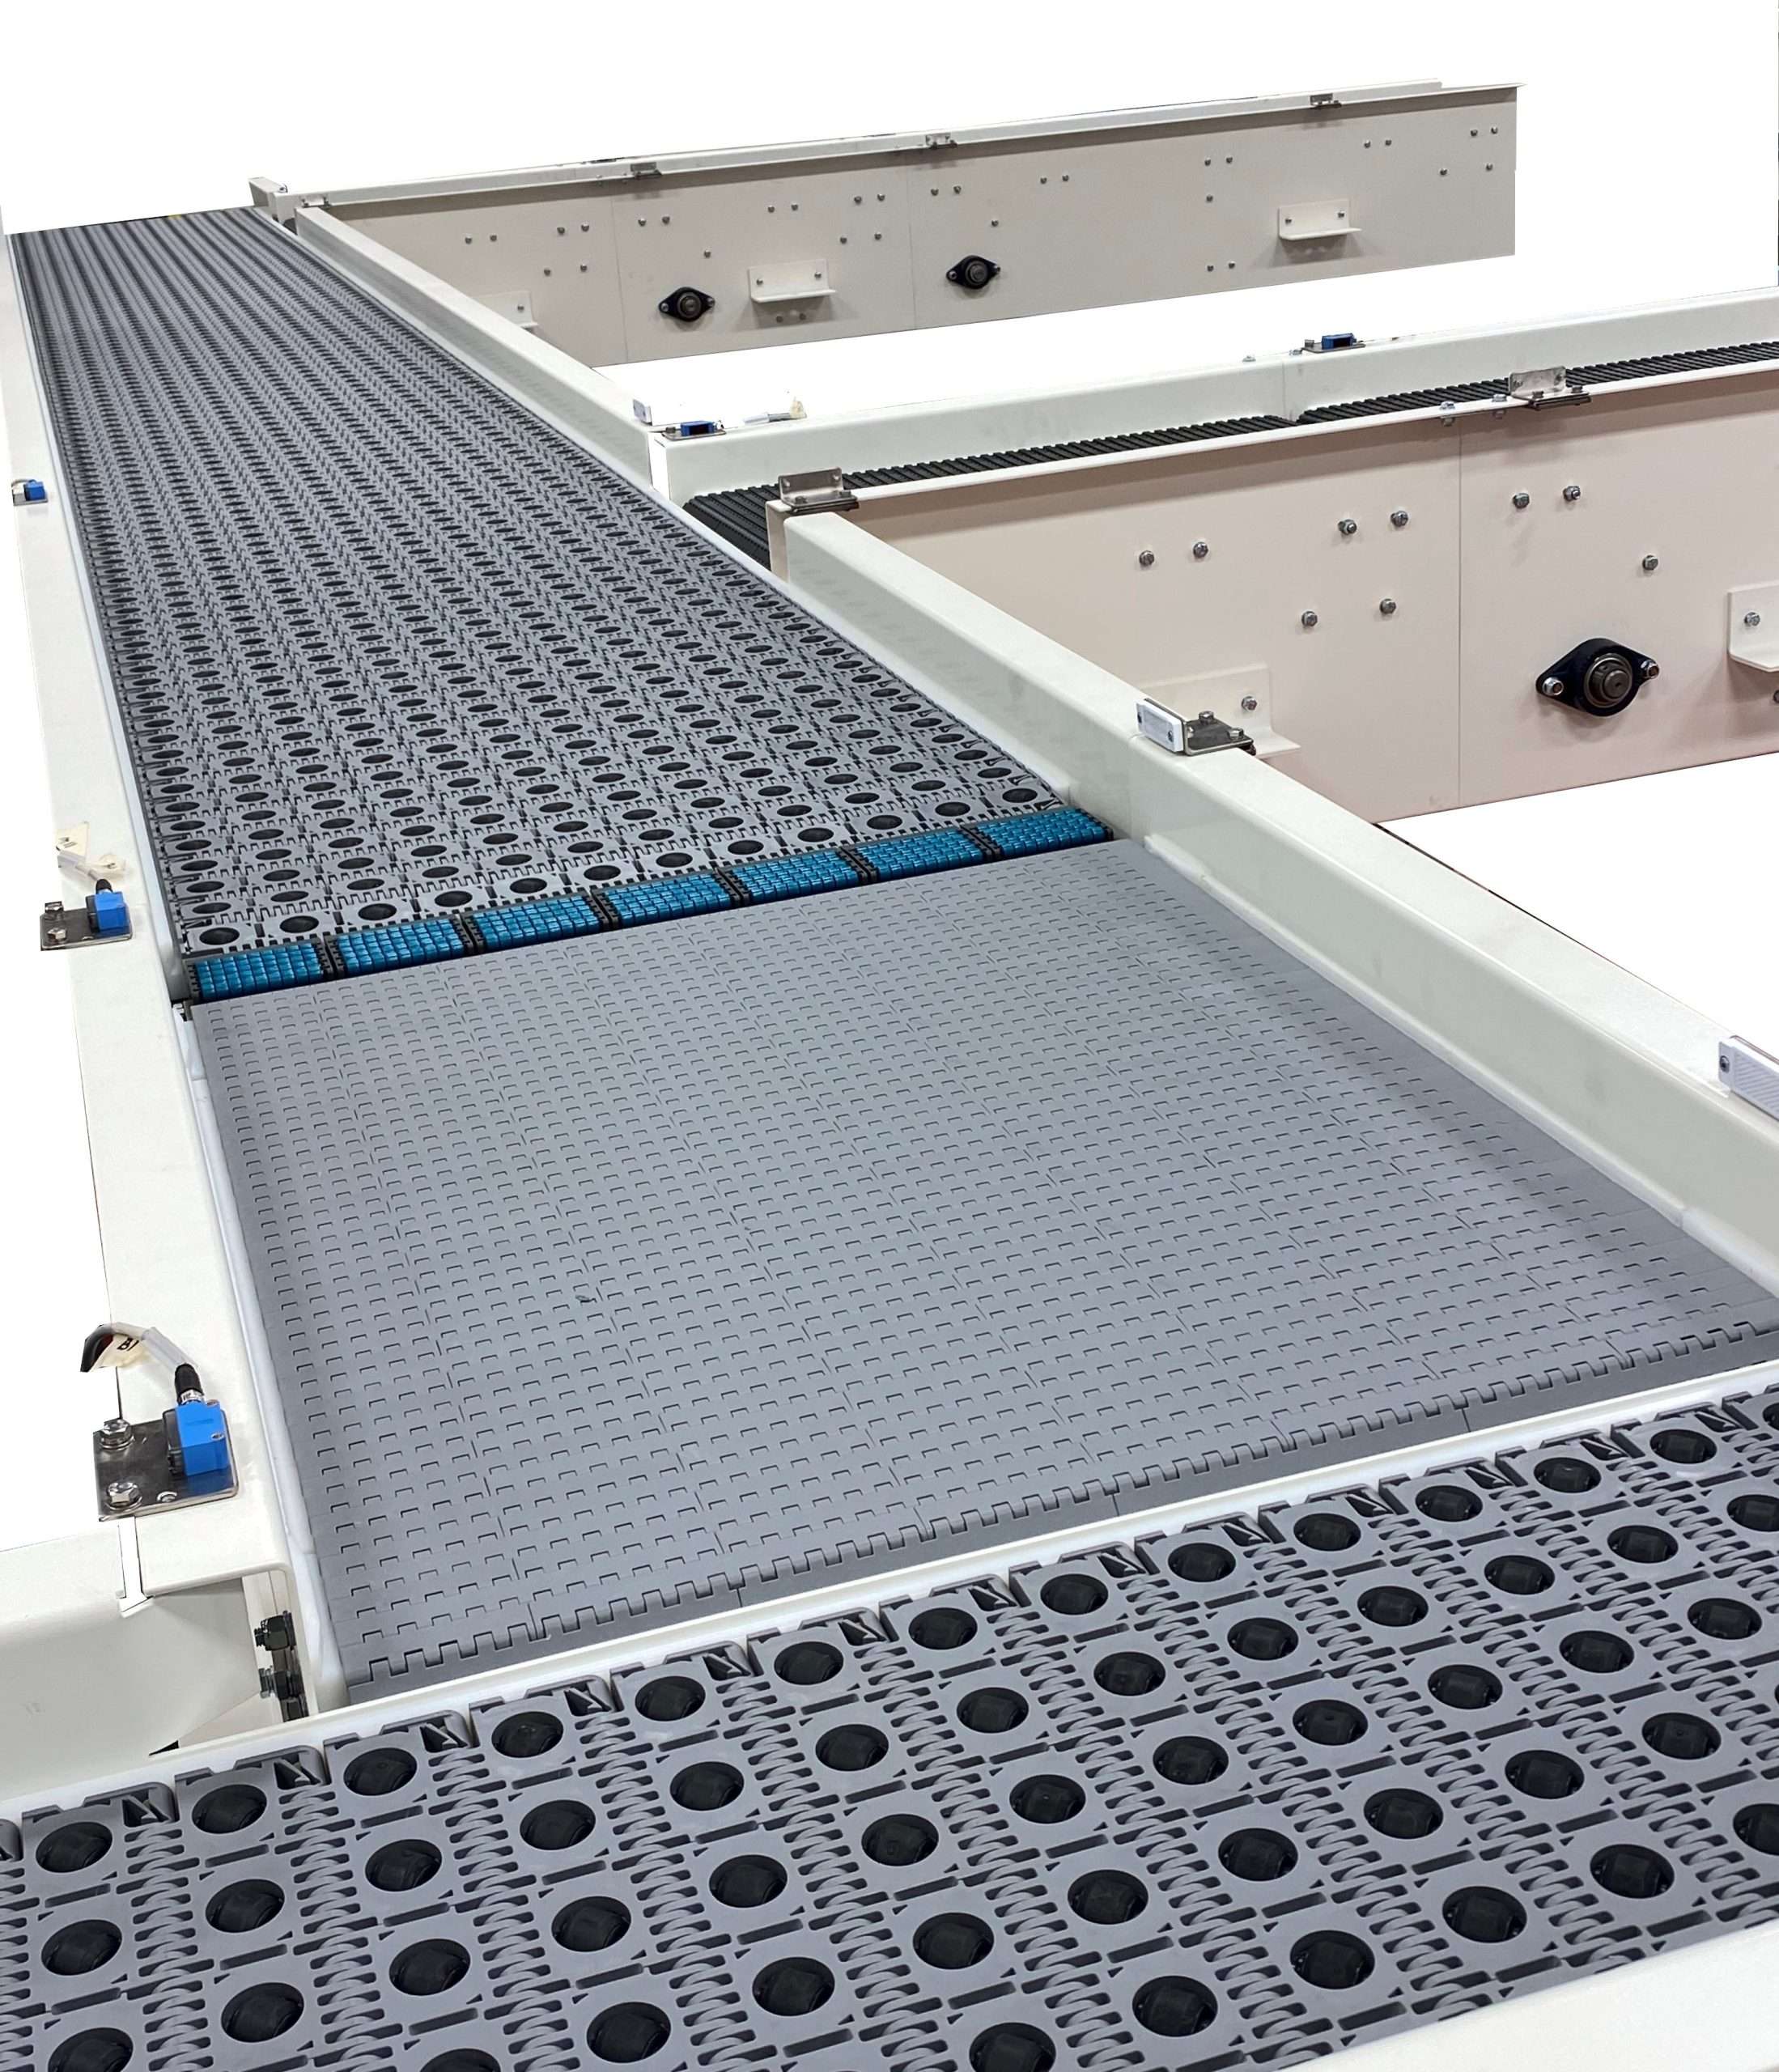 CKF built case conveyors utilising Intralox technology.